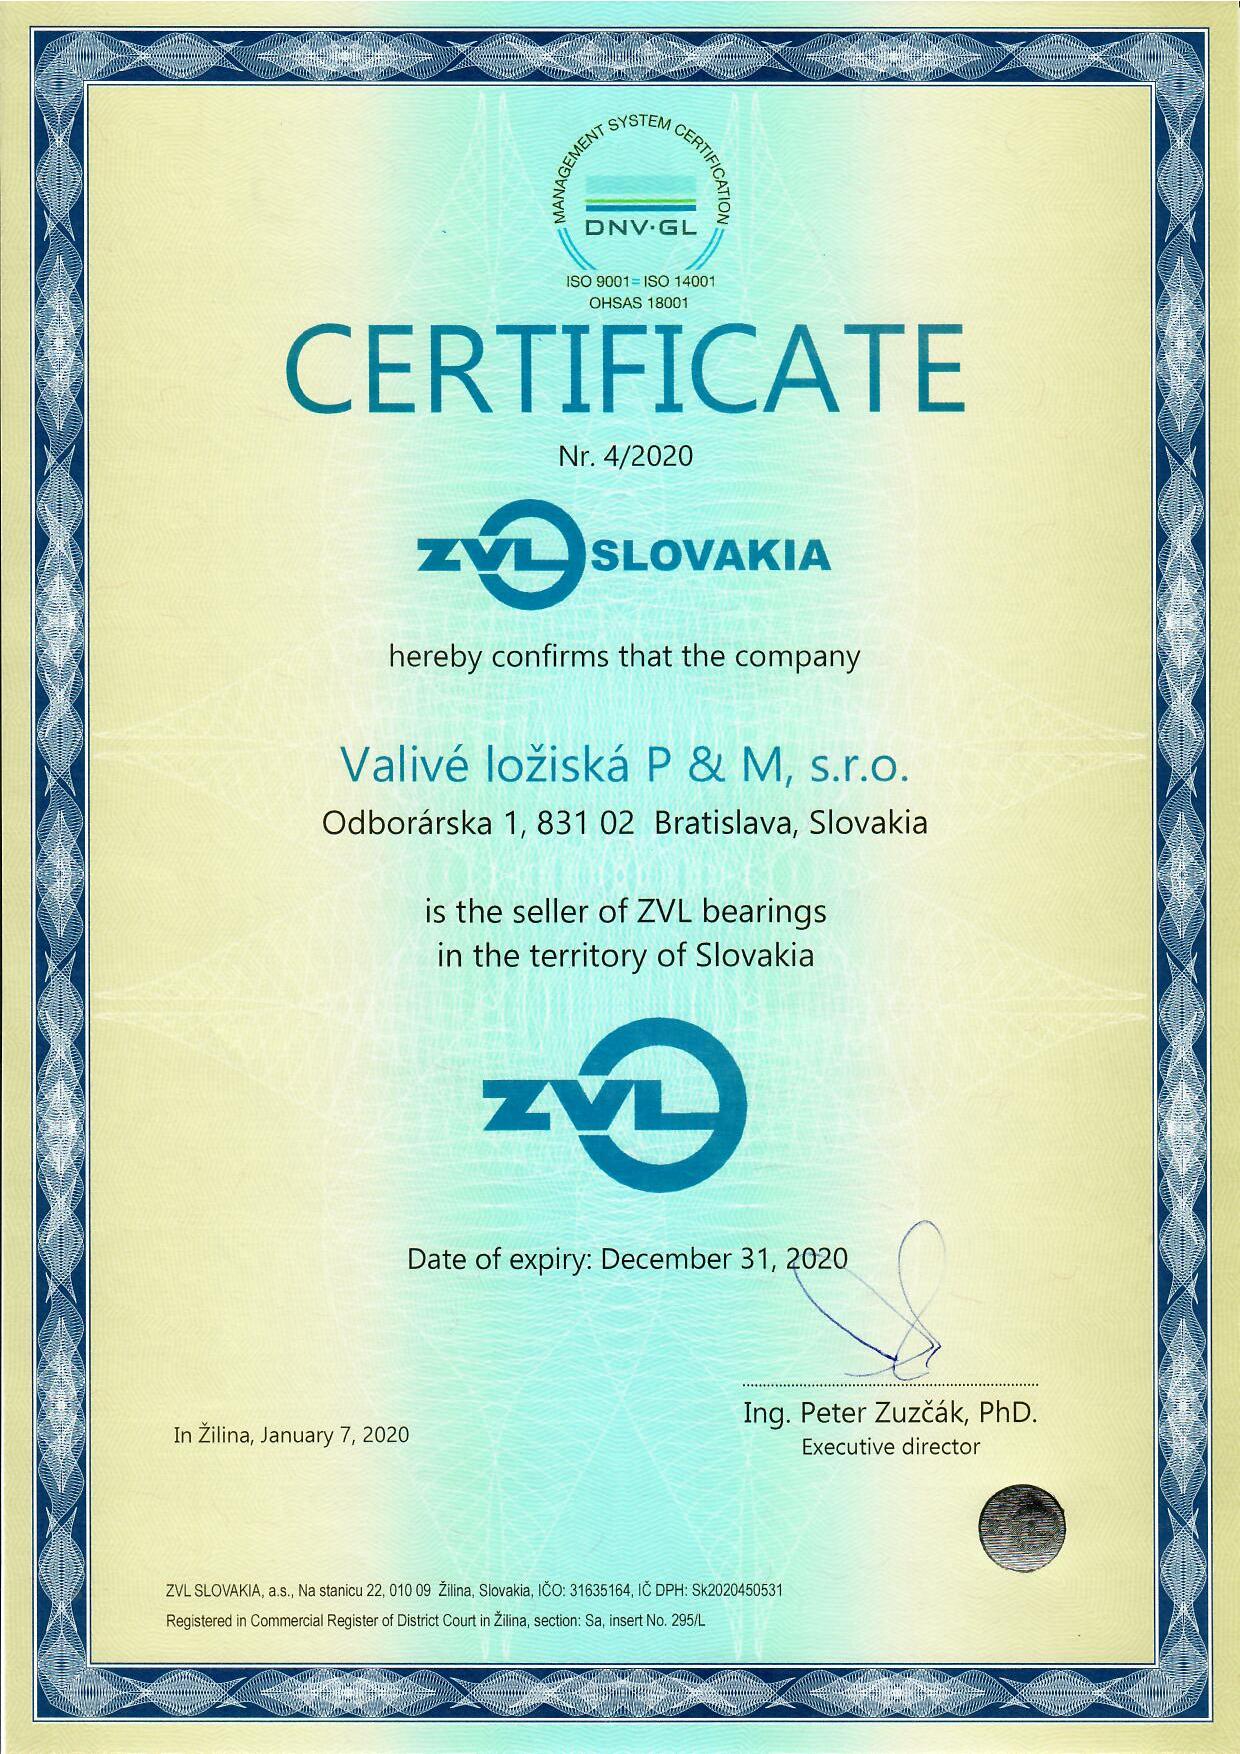 Certificate ZVL Slovakia 2020